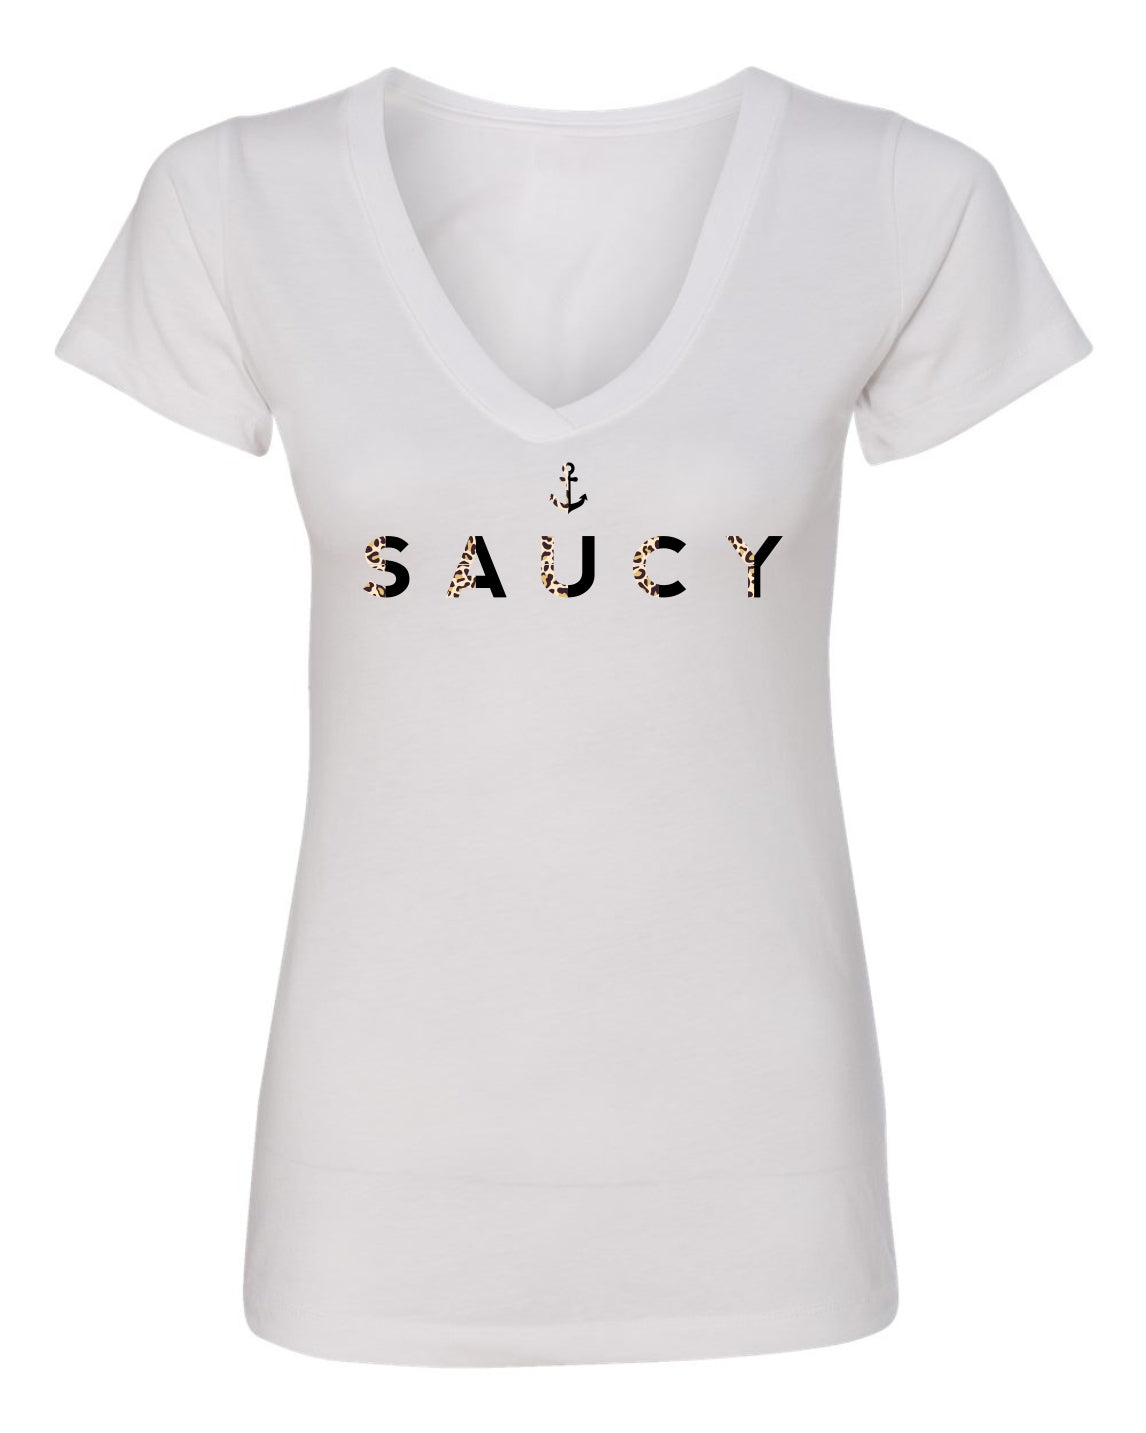 "Saucy" Cheetah Black Split T-Shirt